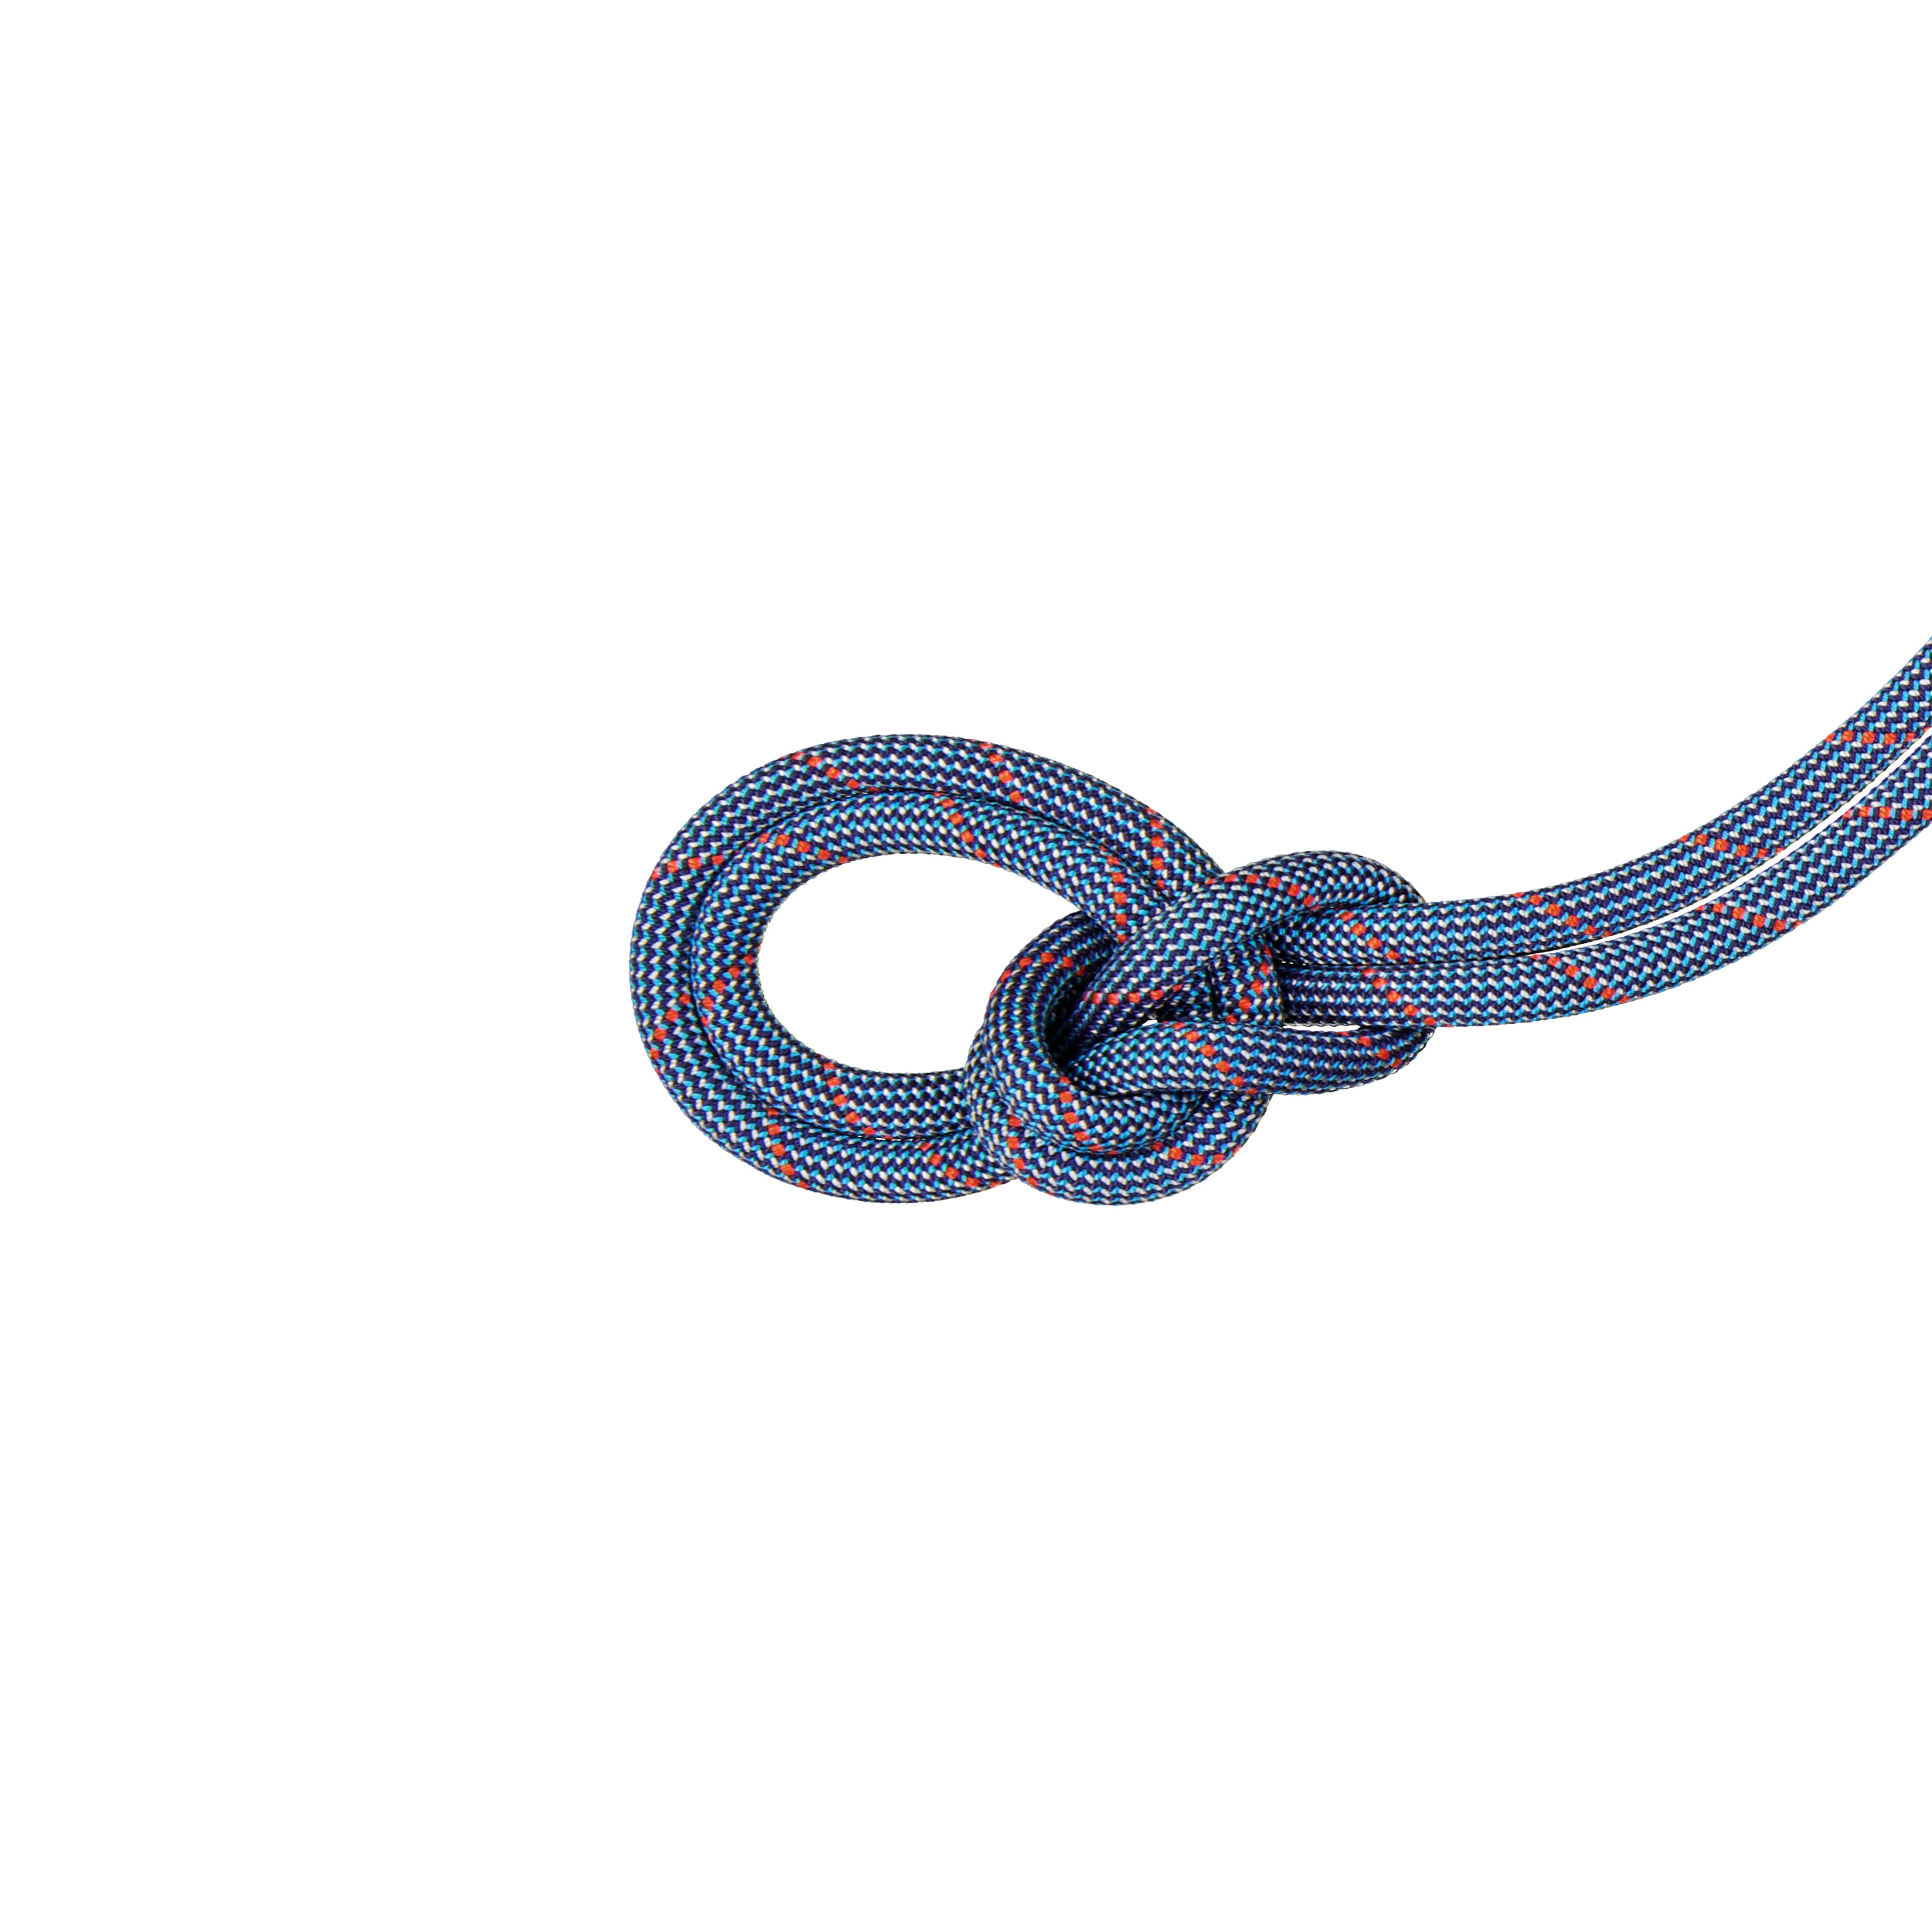 10.2 Crag Classic Rope - Classic Standard, marine-white, 60 m thumbnail